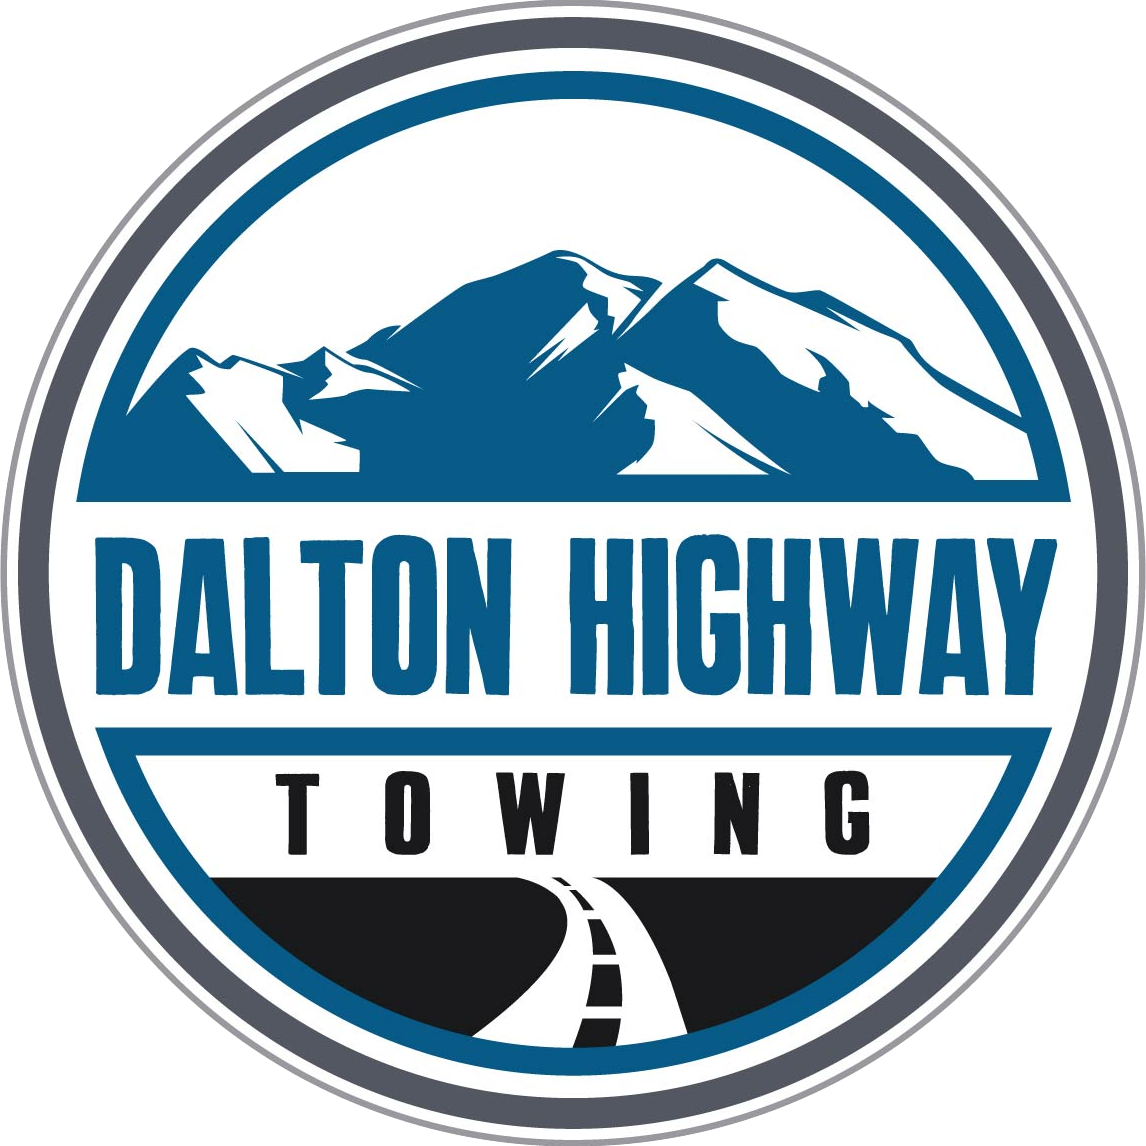 Dalton Highway Towing